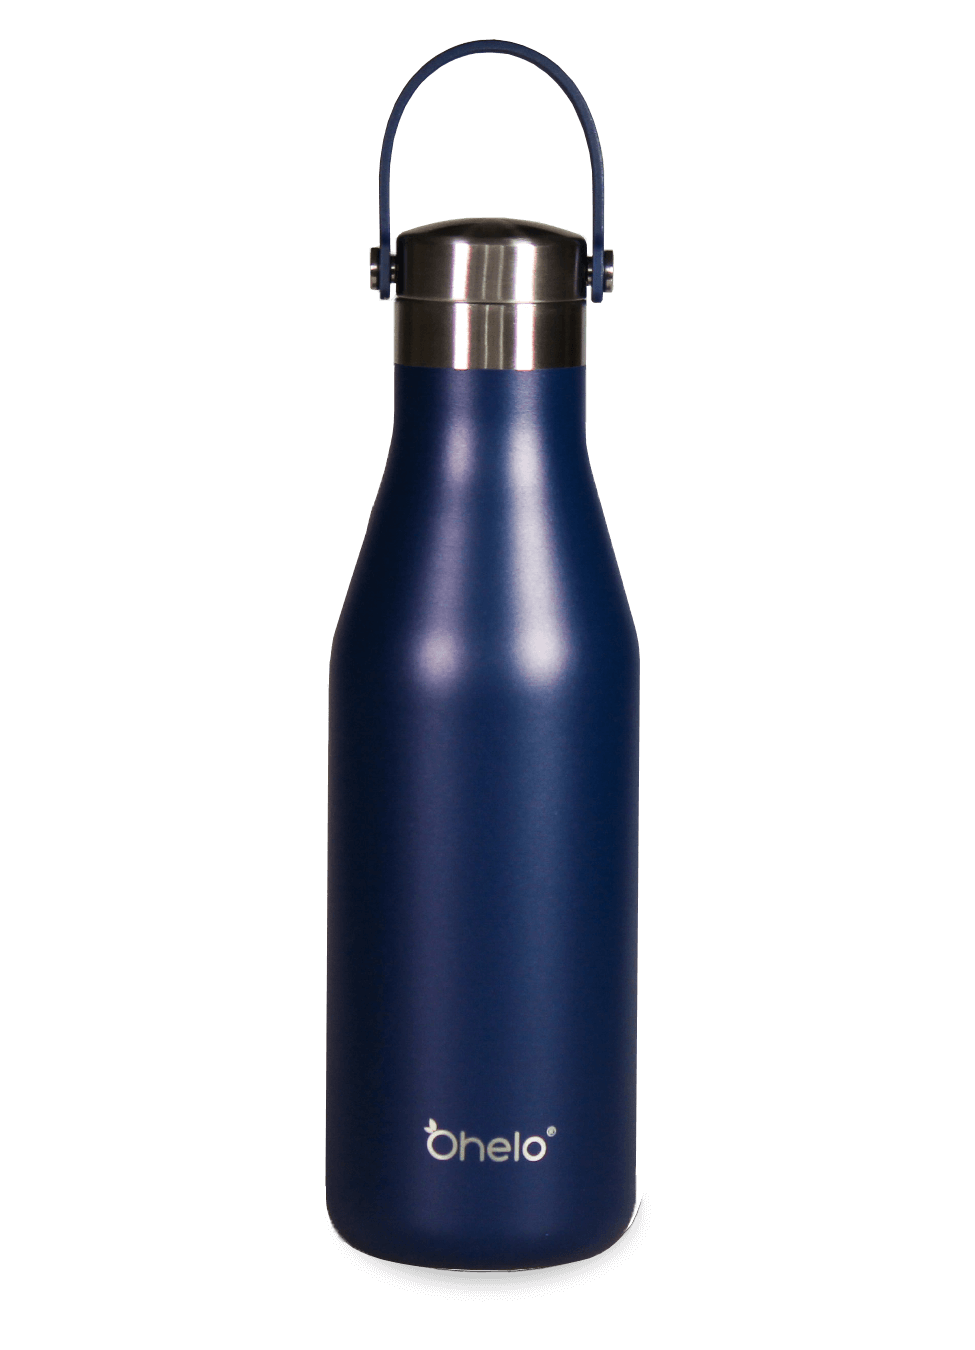 Ohelo dark blue insulated water bottle